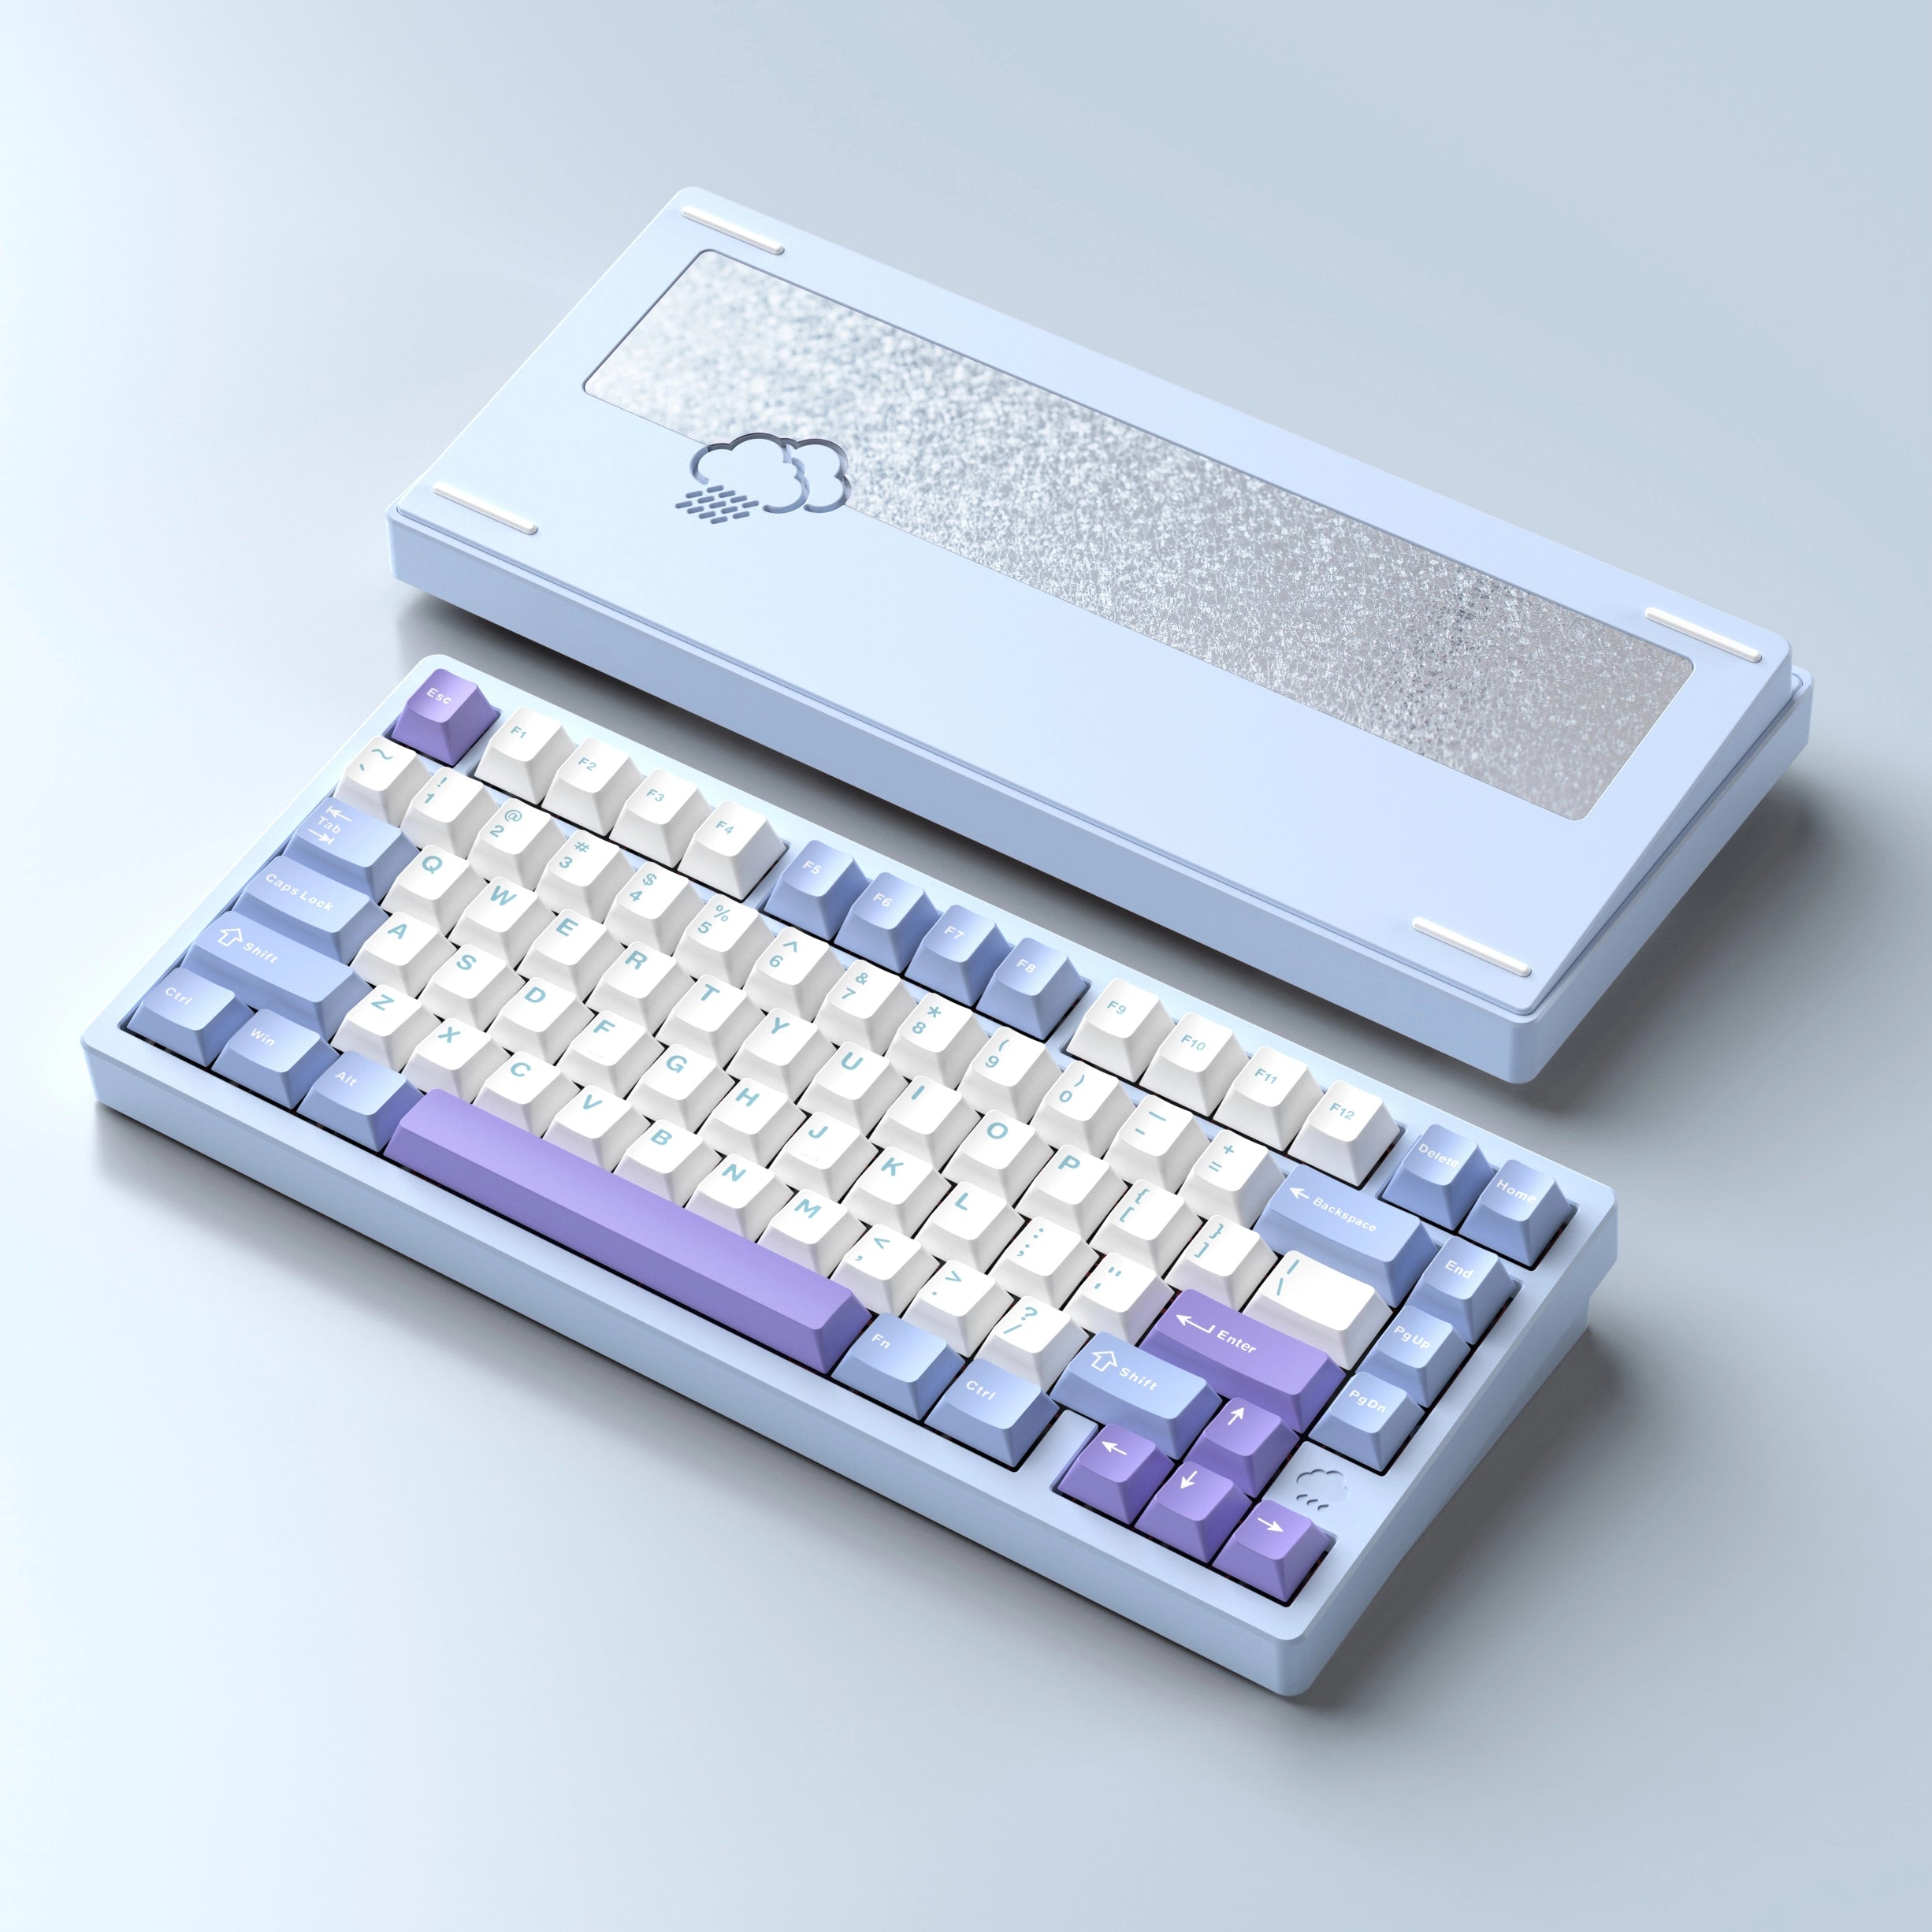 Rainy 75 Keyboard [Preorder]